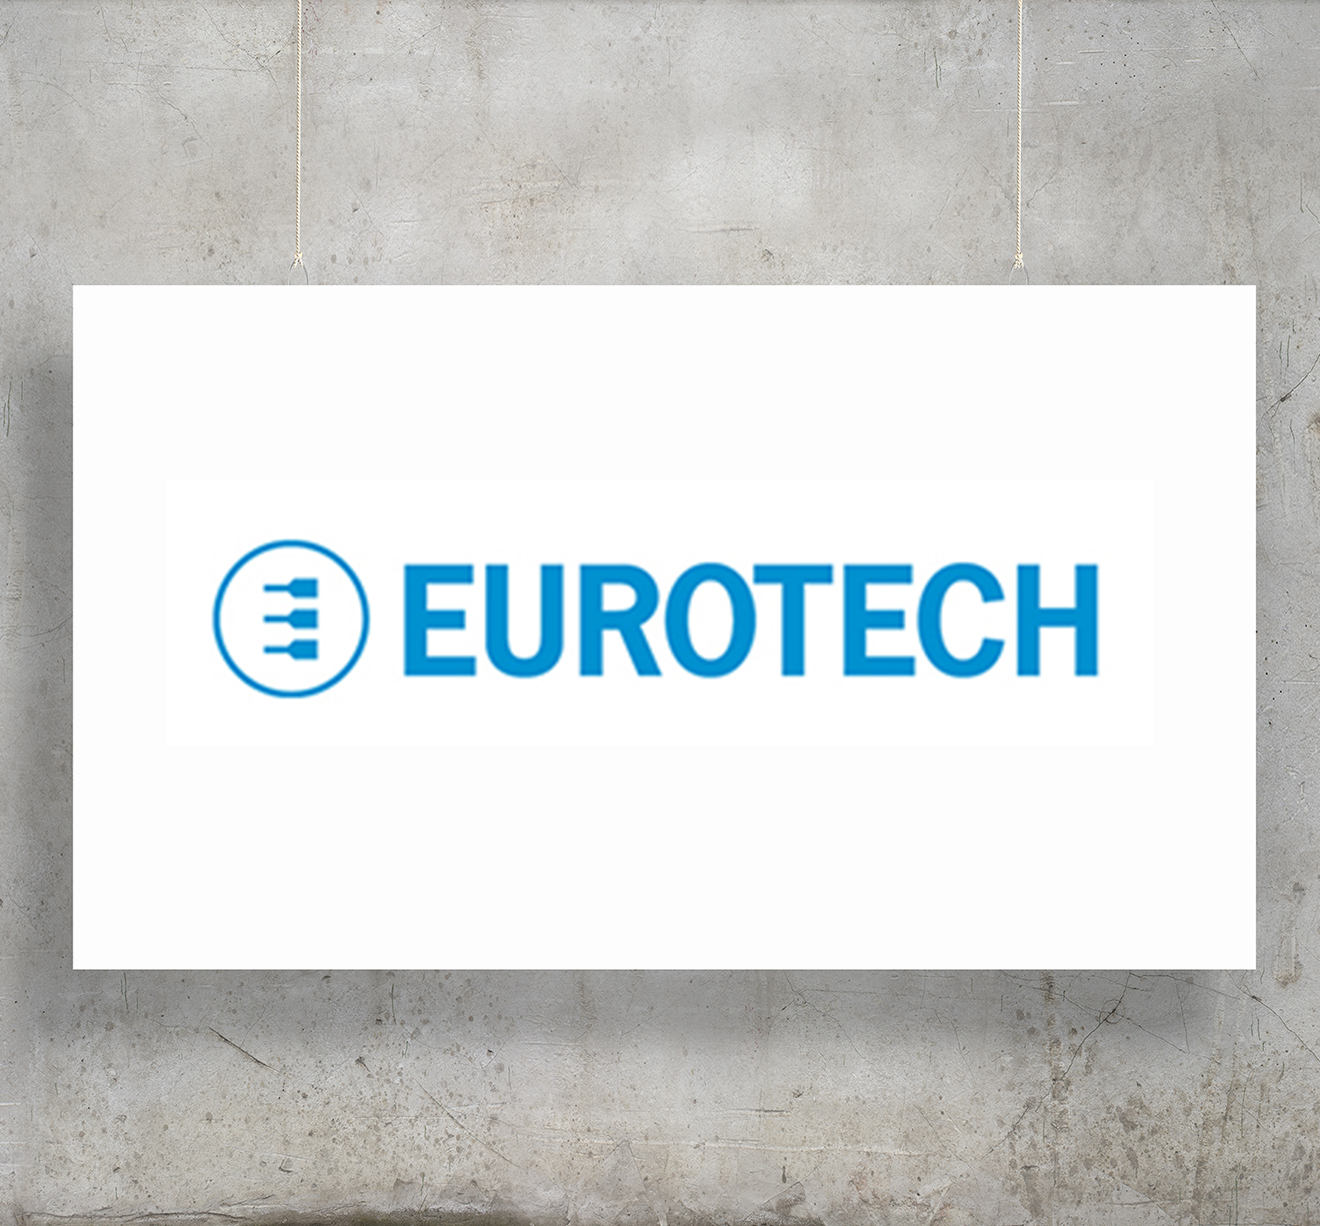 Content Hub Eurotech